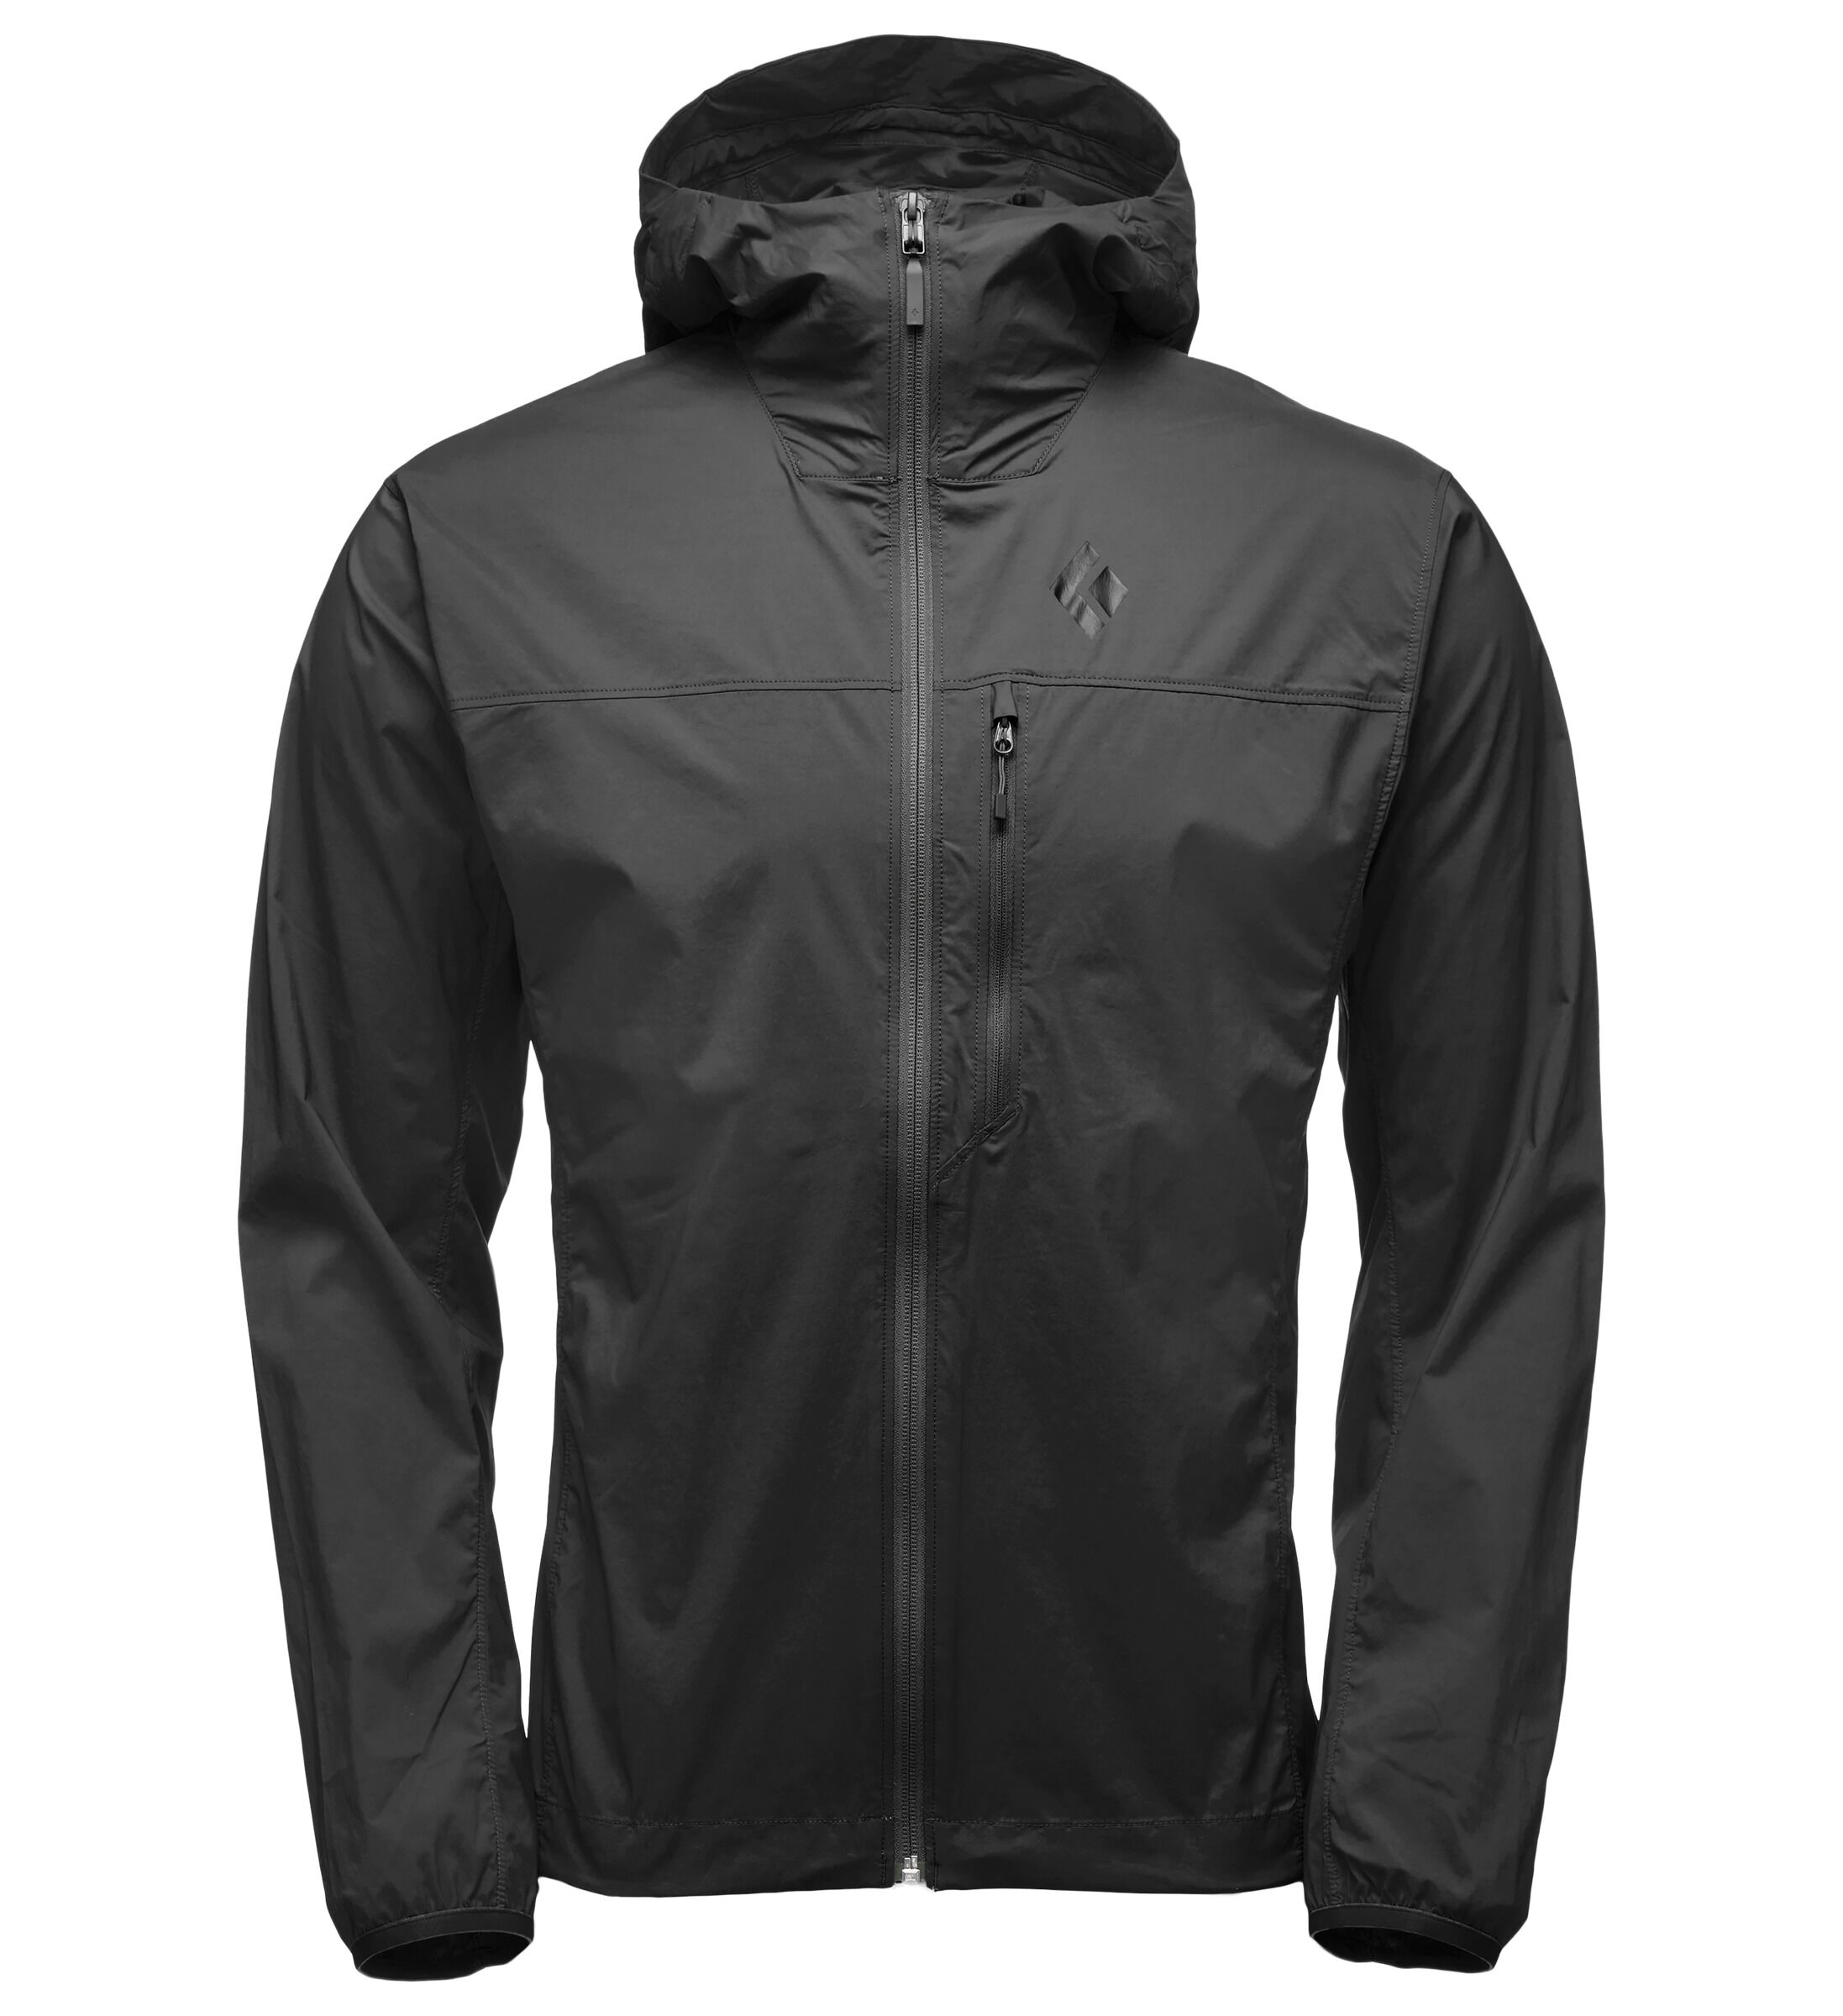 Black Diamond - Alpine Start Hoody - Wind jacket - Men's